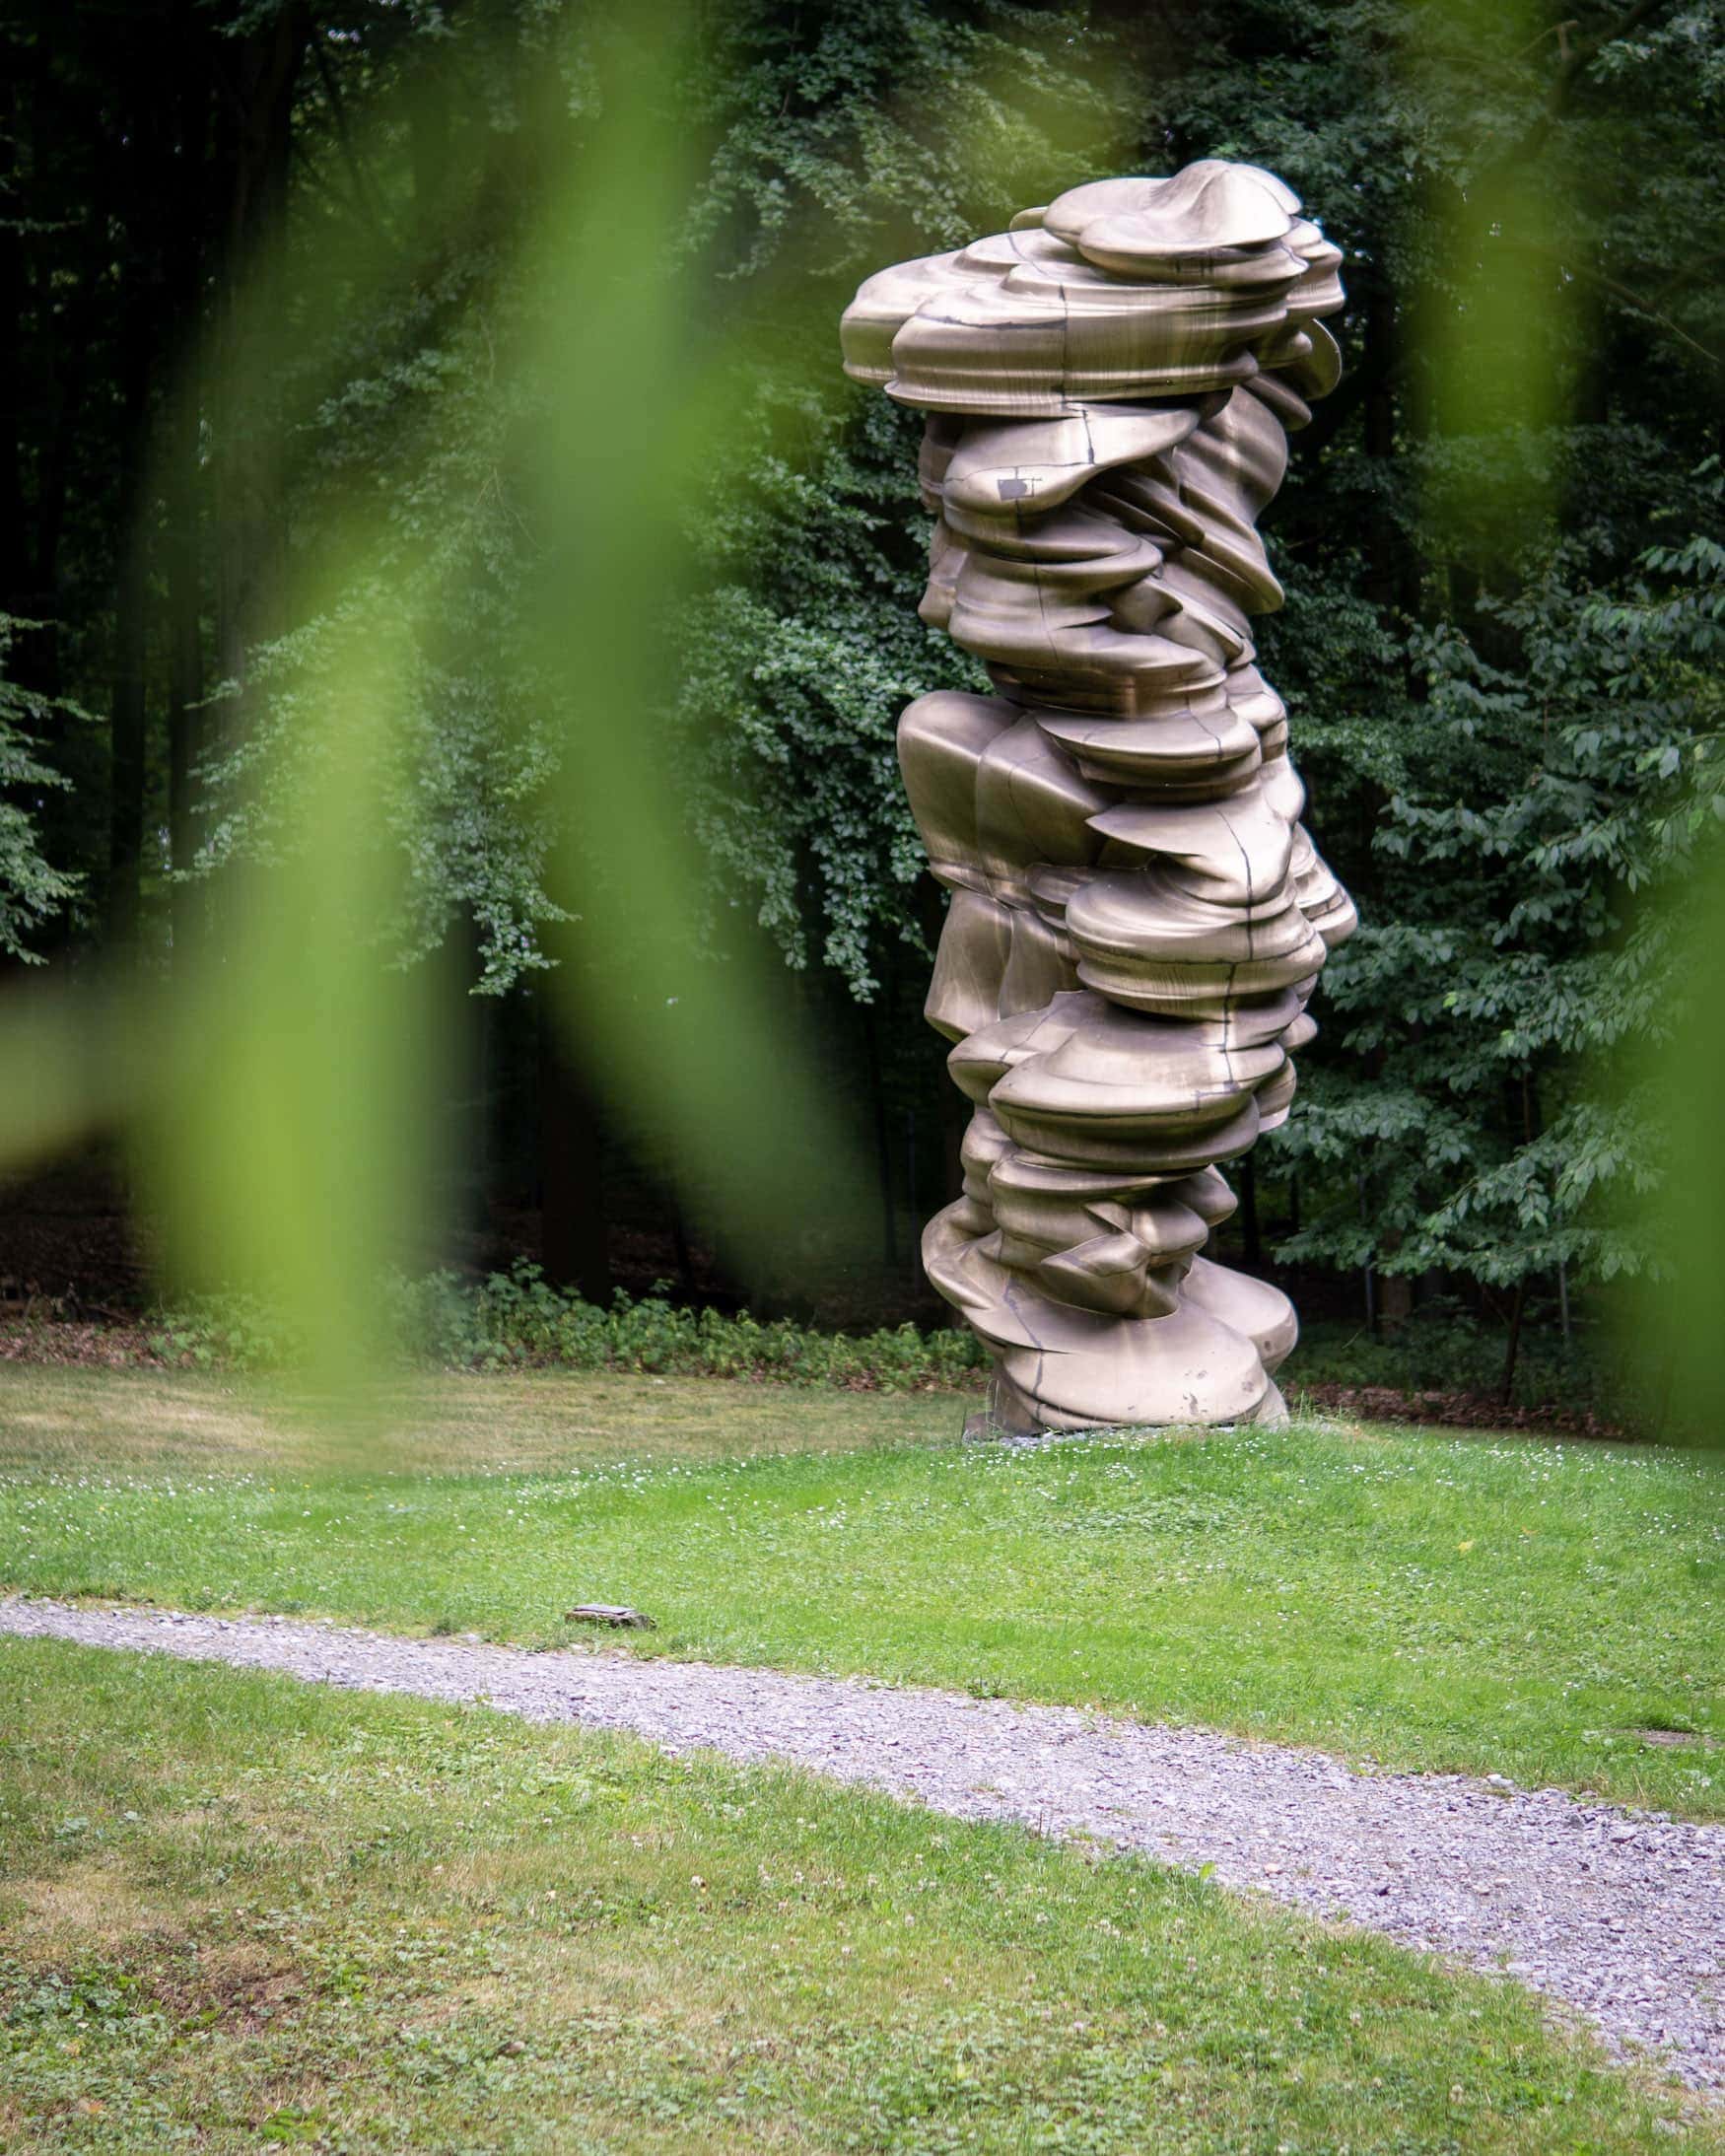 Sculpture in the Waldfrieden Sculpture Park